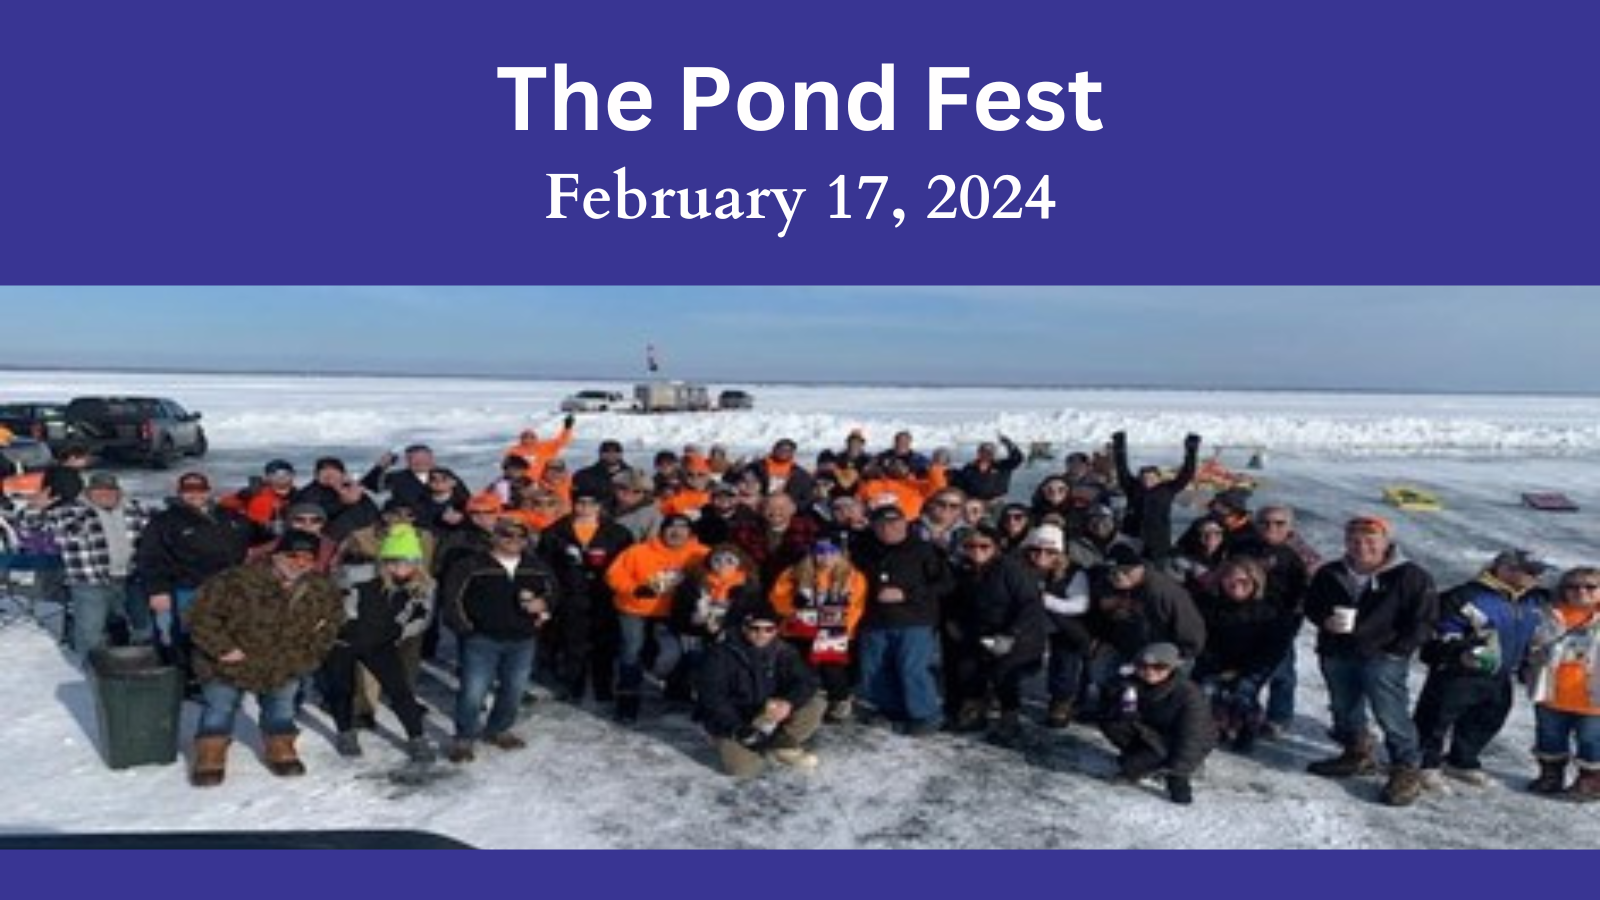 The Pond Fest